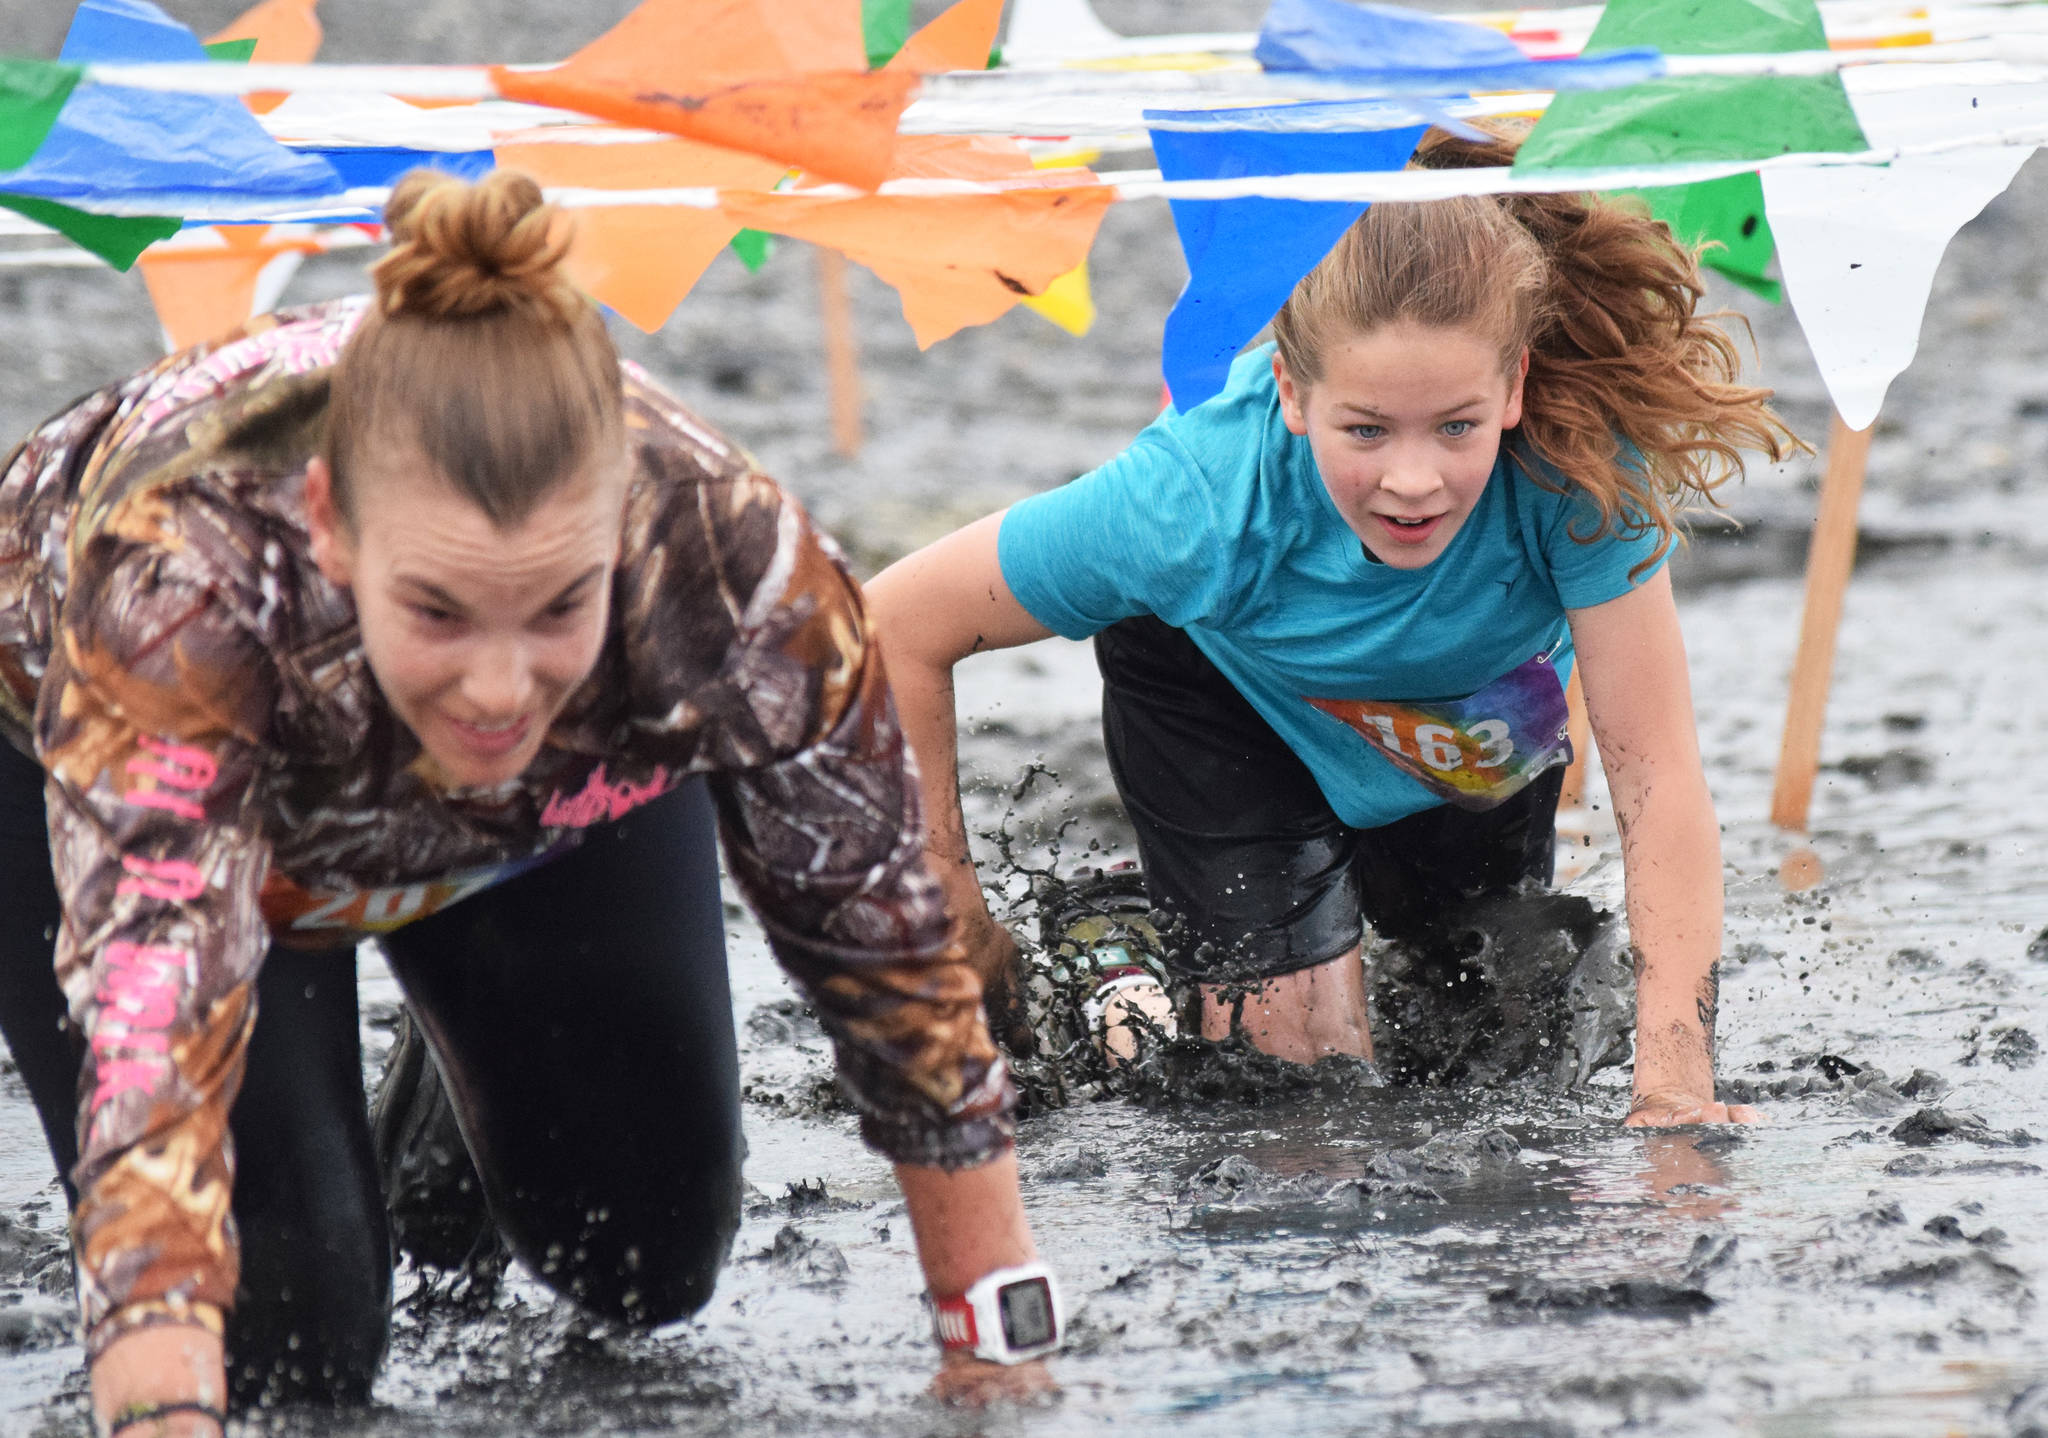 Teresa Fallon (right) follows Julie Mages through the mud Saturday, June 15, 2019, at the Ninilchik Clam Scramble Mud and Obstacle Run in Ninilchik, Alaska. (Photo by Joey Klecka/Peninsula Clarion)